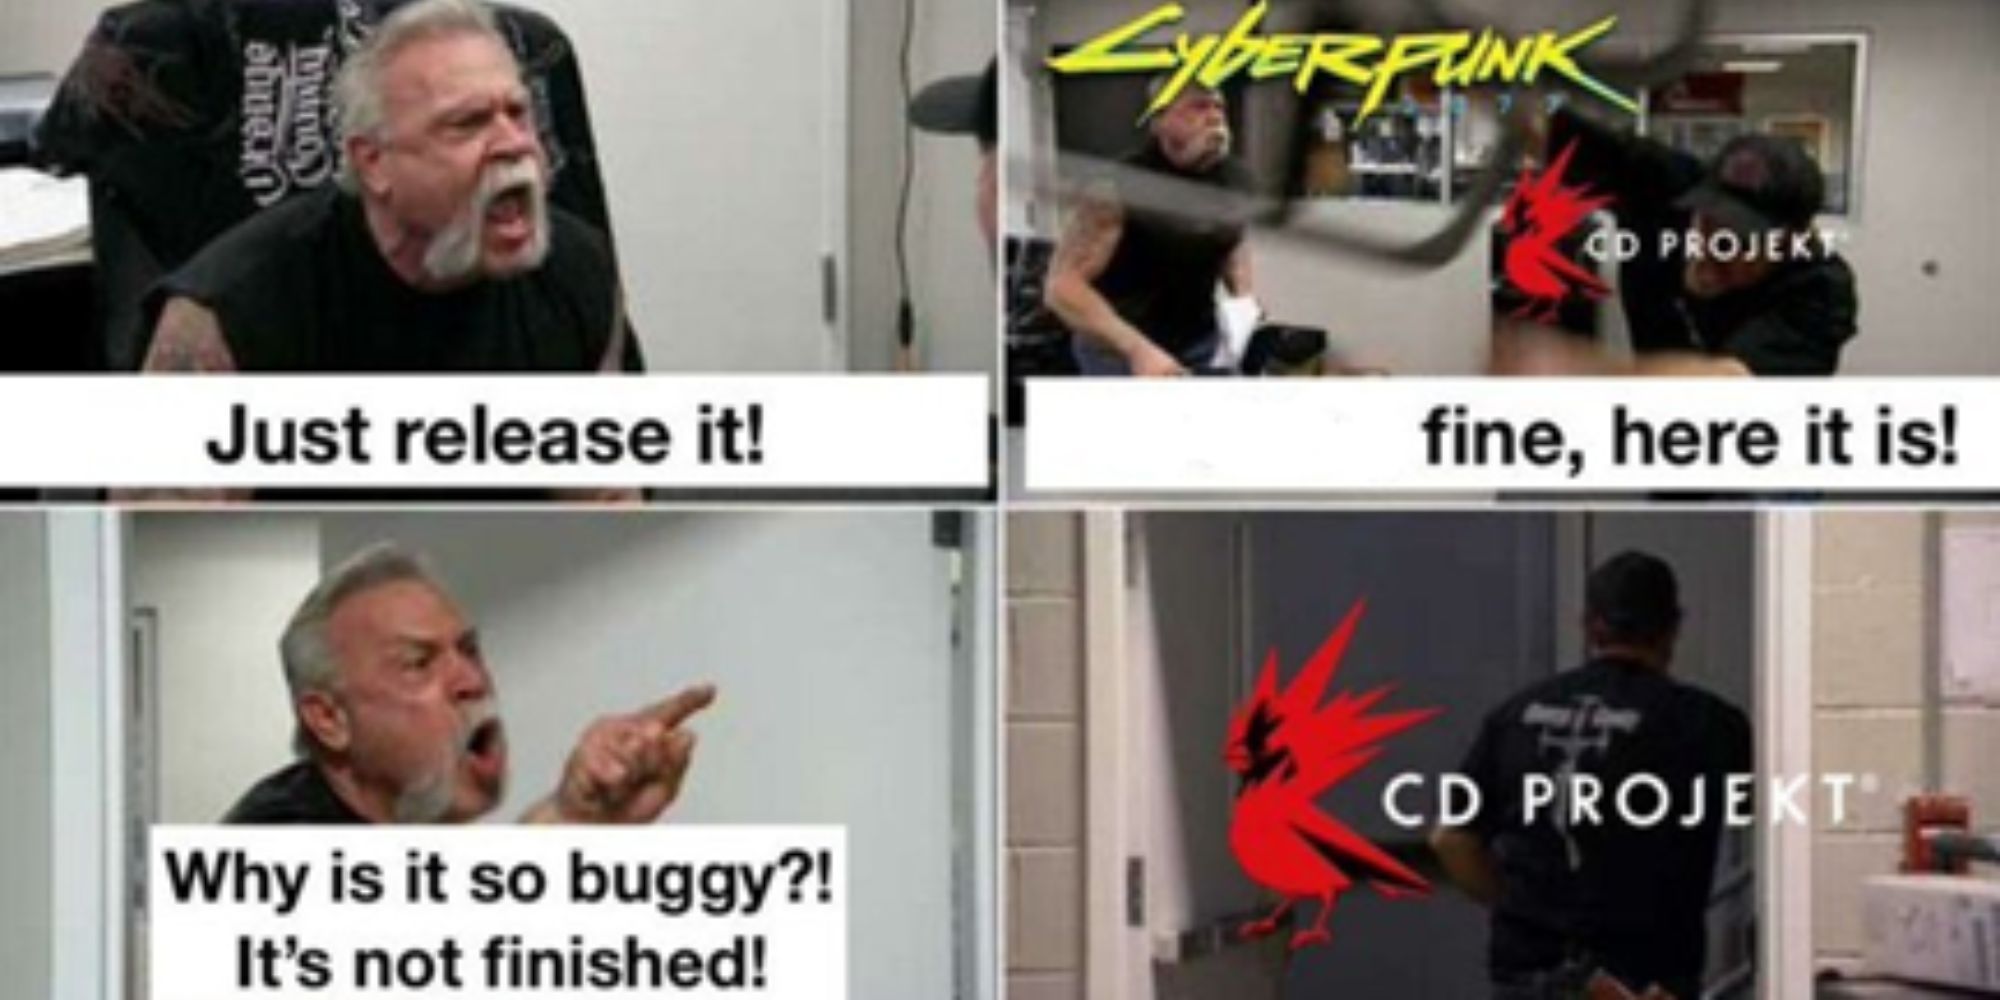 Players demand CD Projekt Red to release Cyberpunk 2077